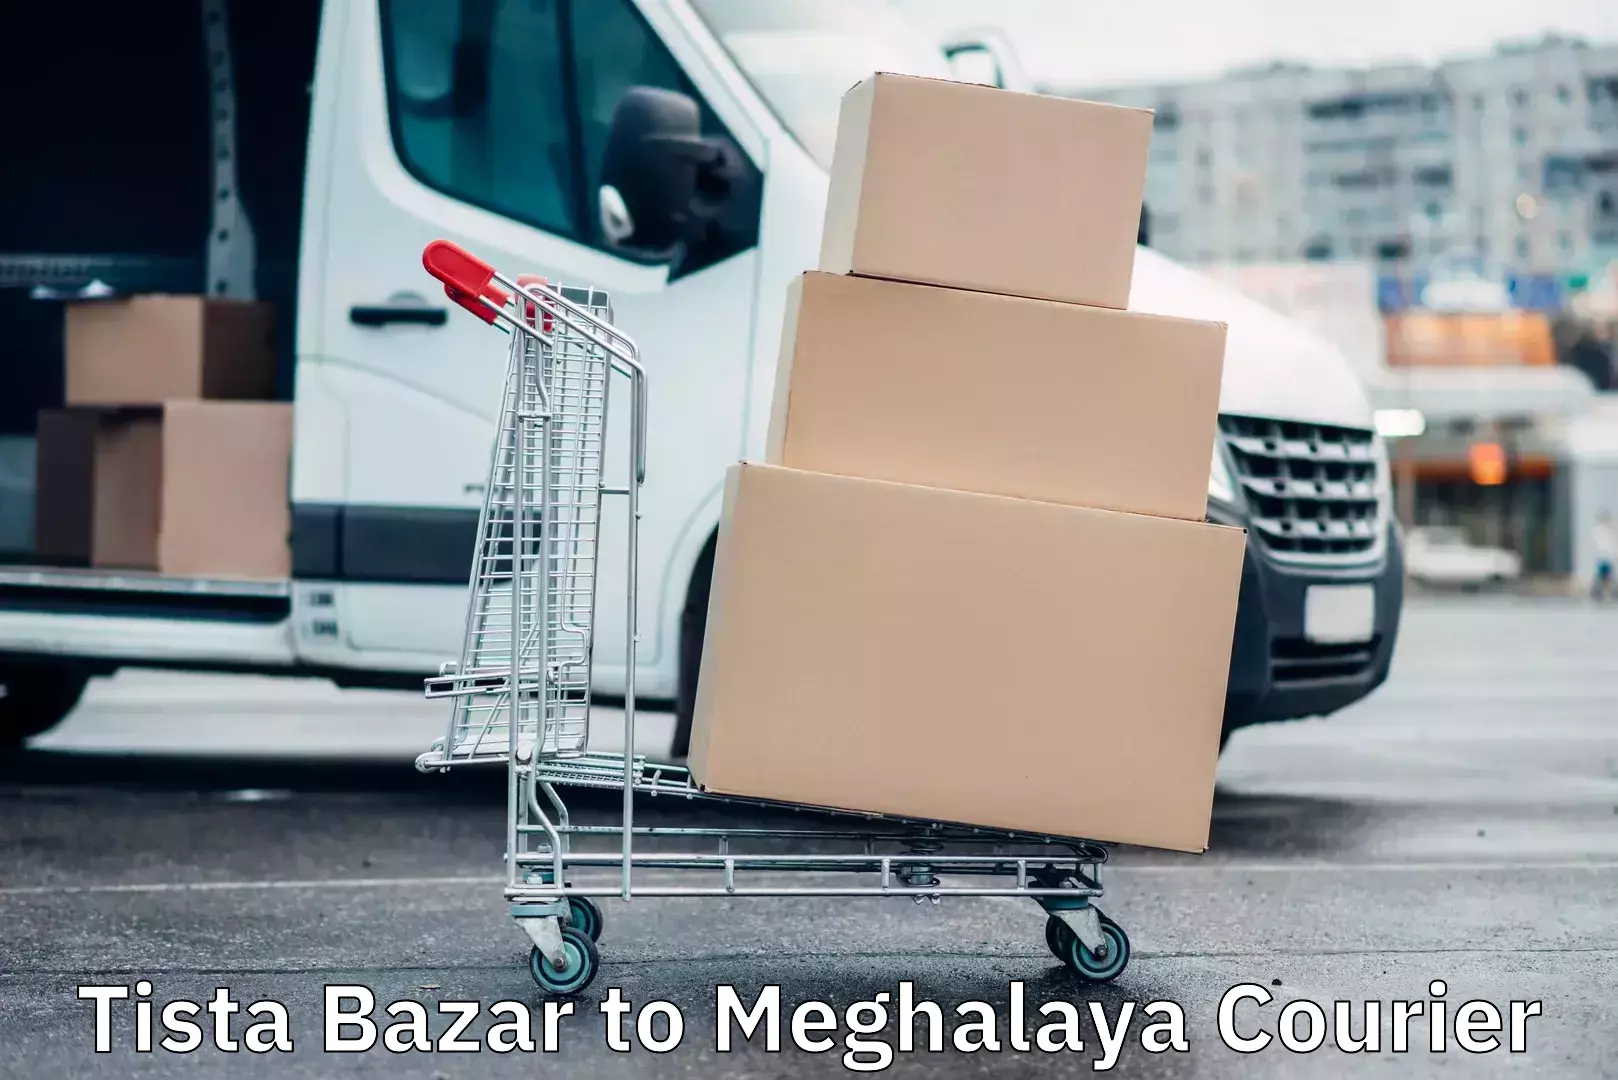 Efficient order fulfillment Tista Bazar to Meghalaya